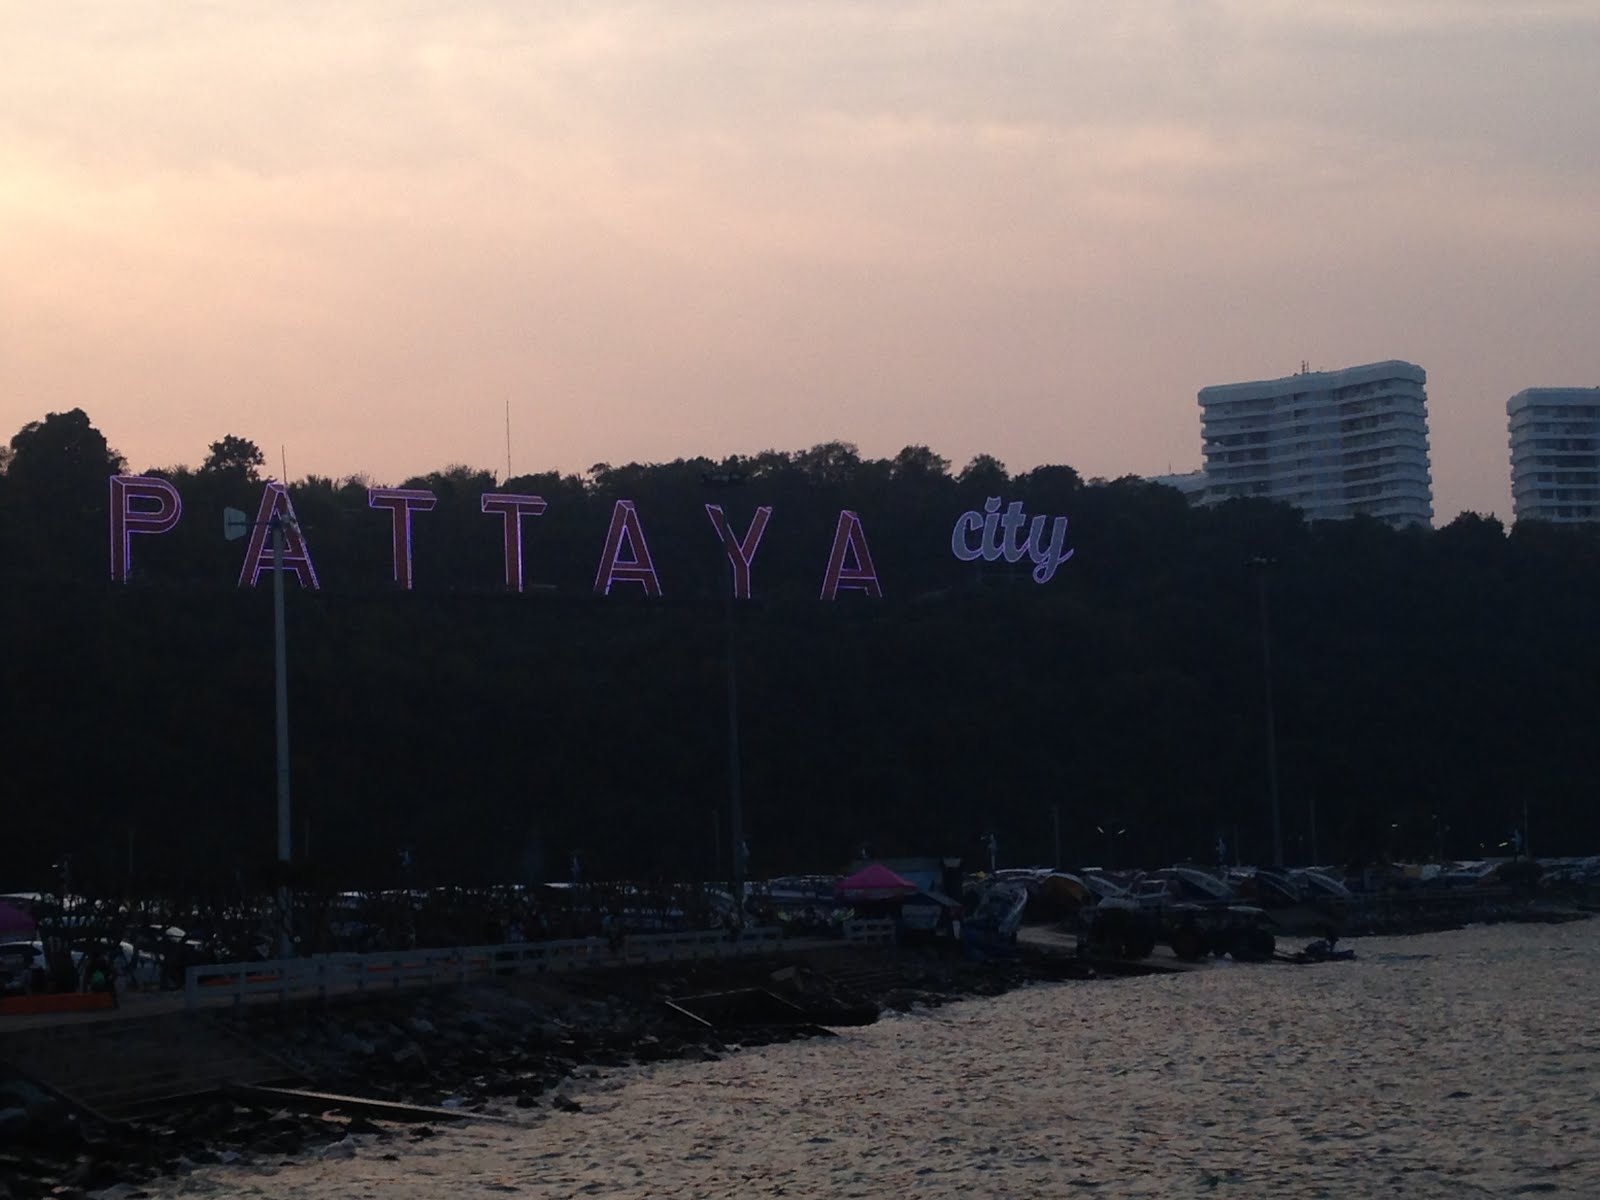 Pattaya city